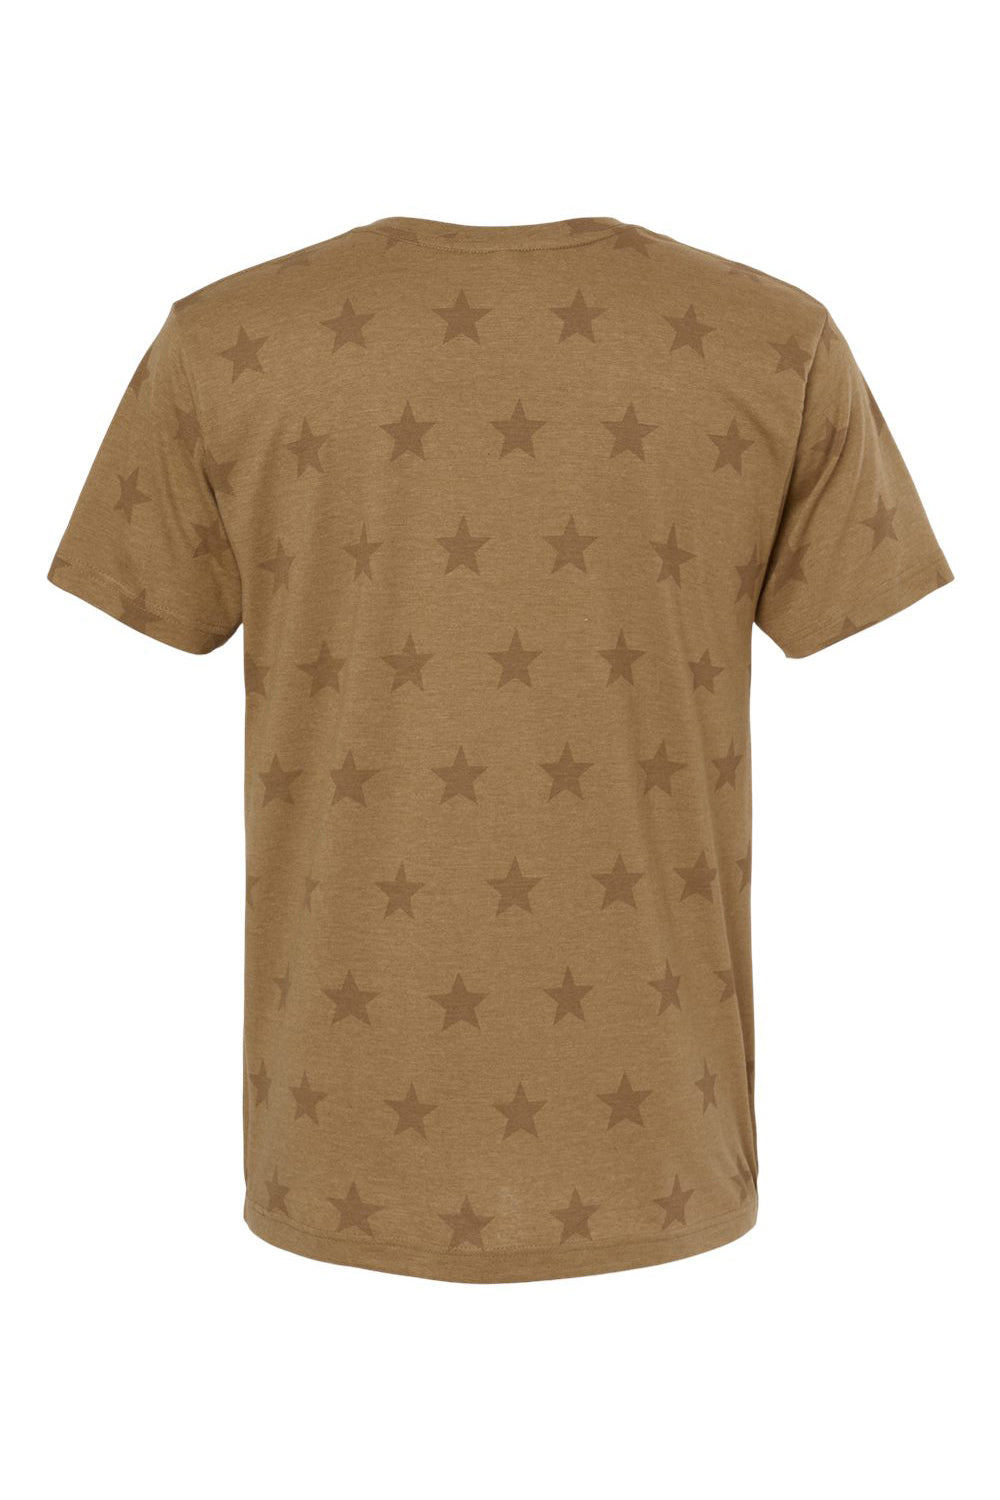 Code Five 3929 Mens Star Print Short Sleeve Crewneck T-Shirt Coyote Brown Flat Back